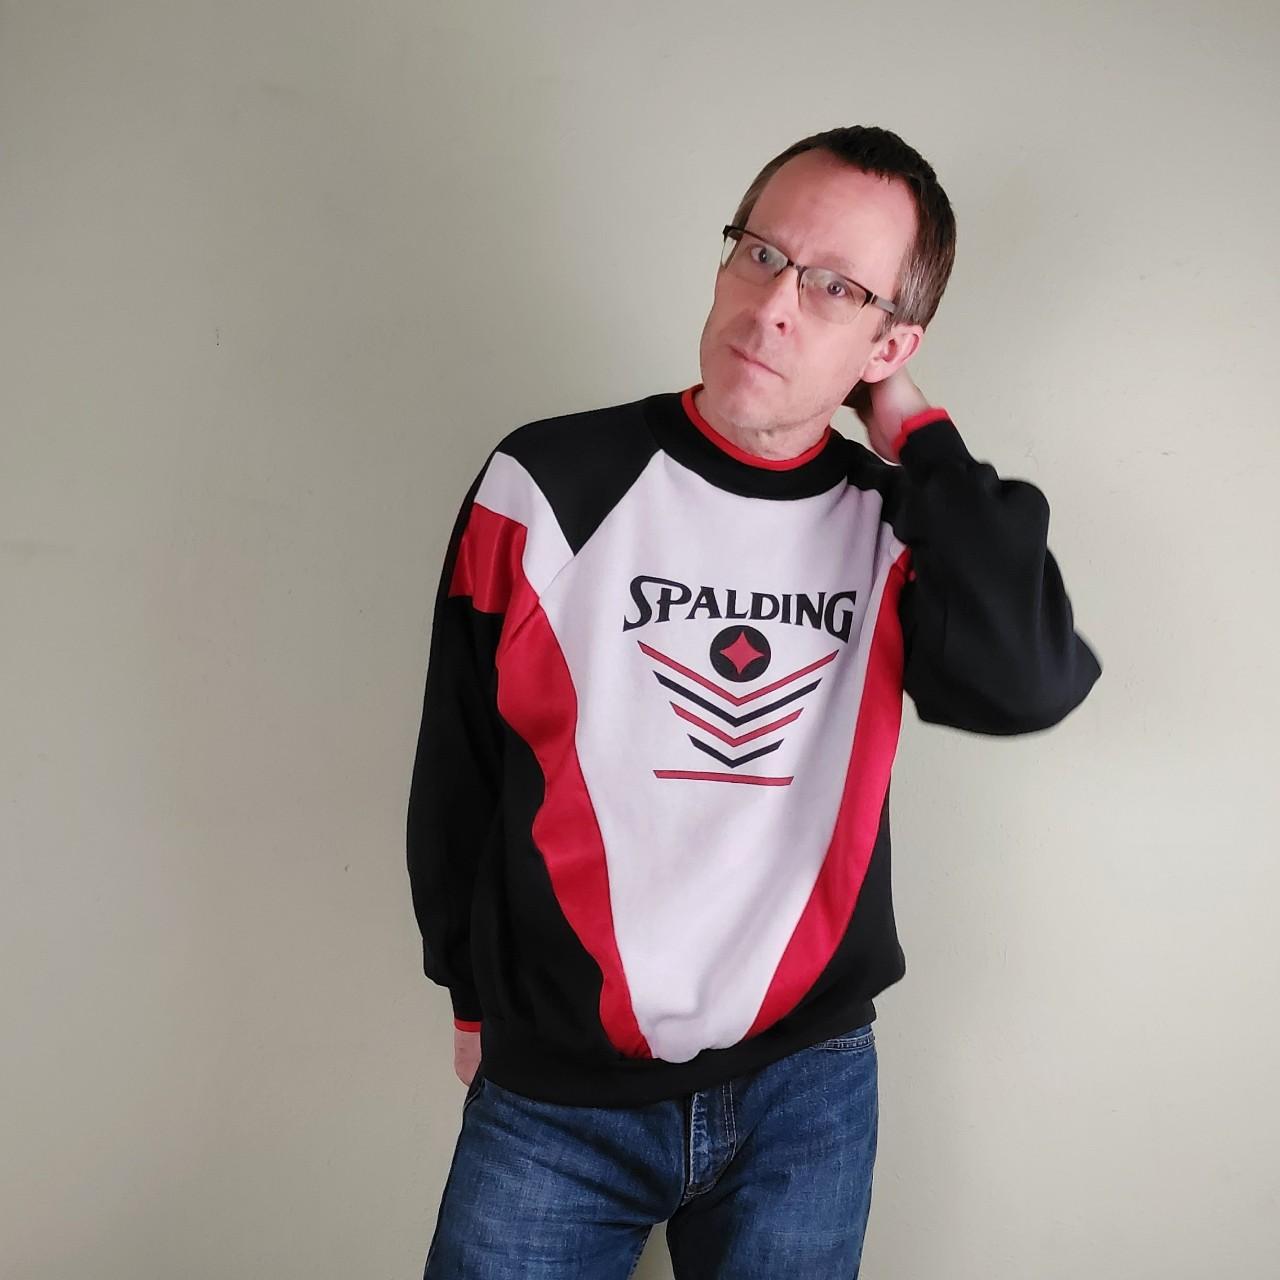 Spalding Men's Red and Black Sweatshirt (2)